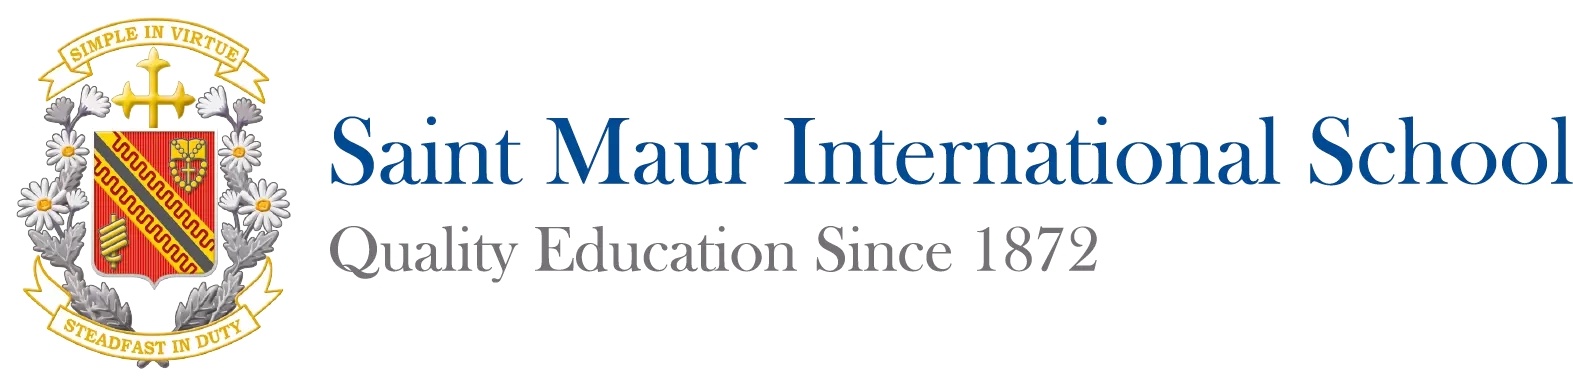 Saint Maur International School logo